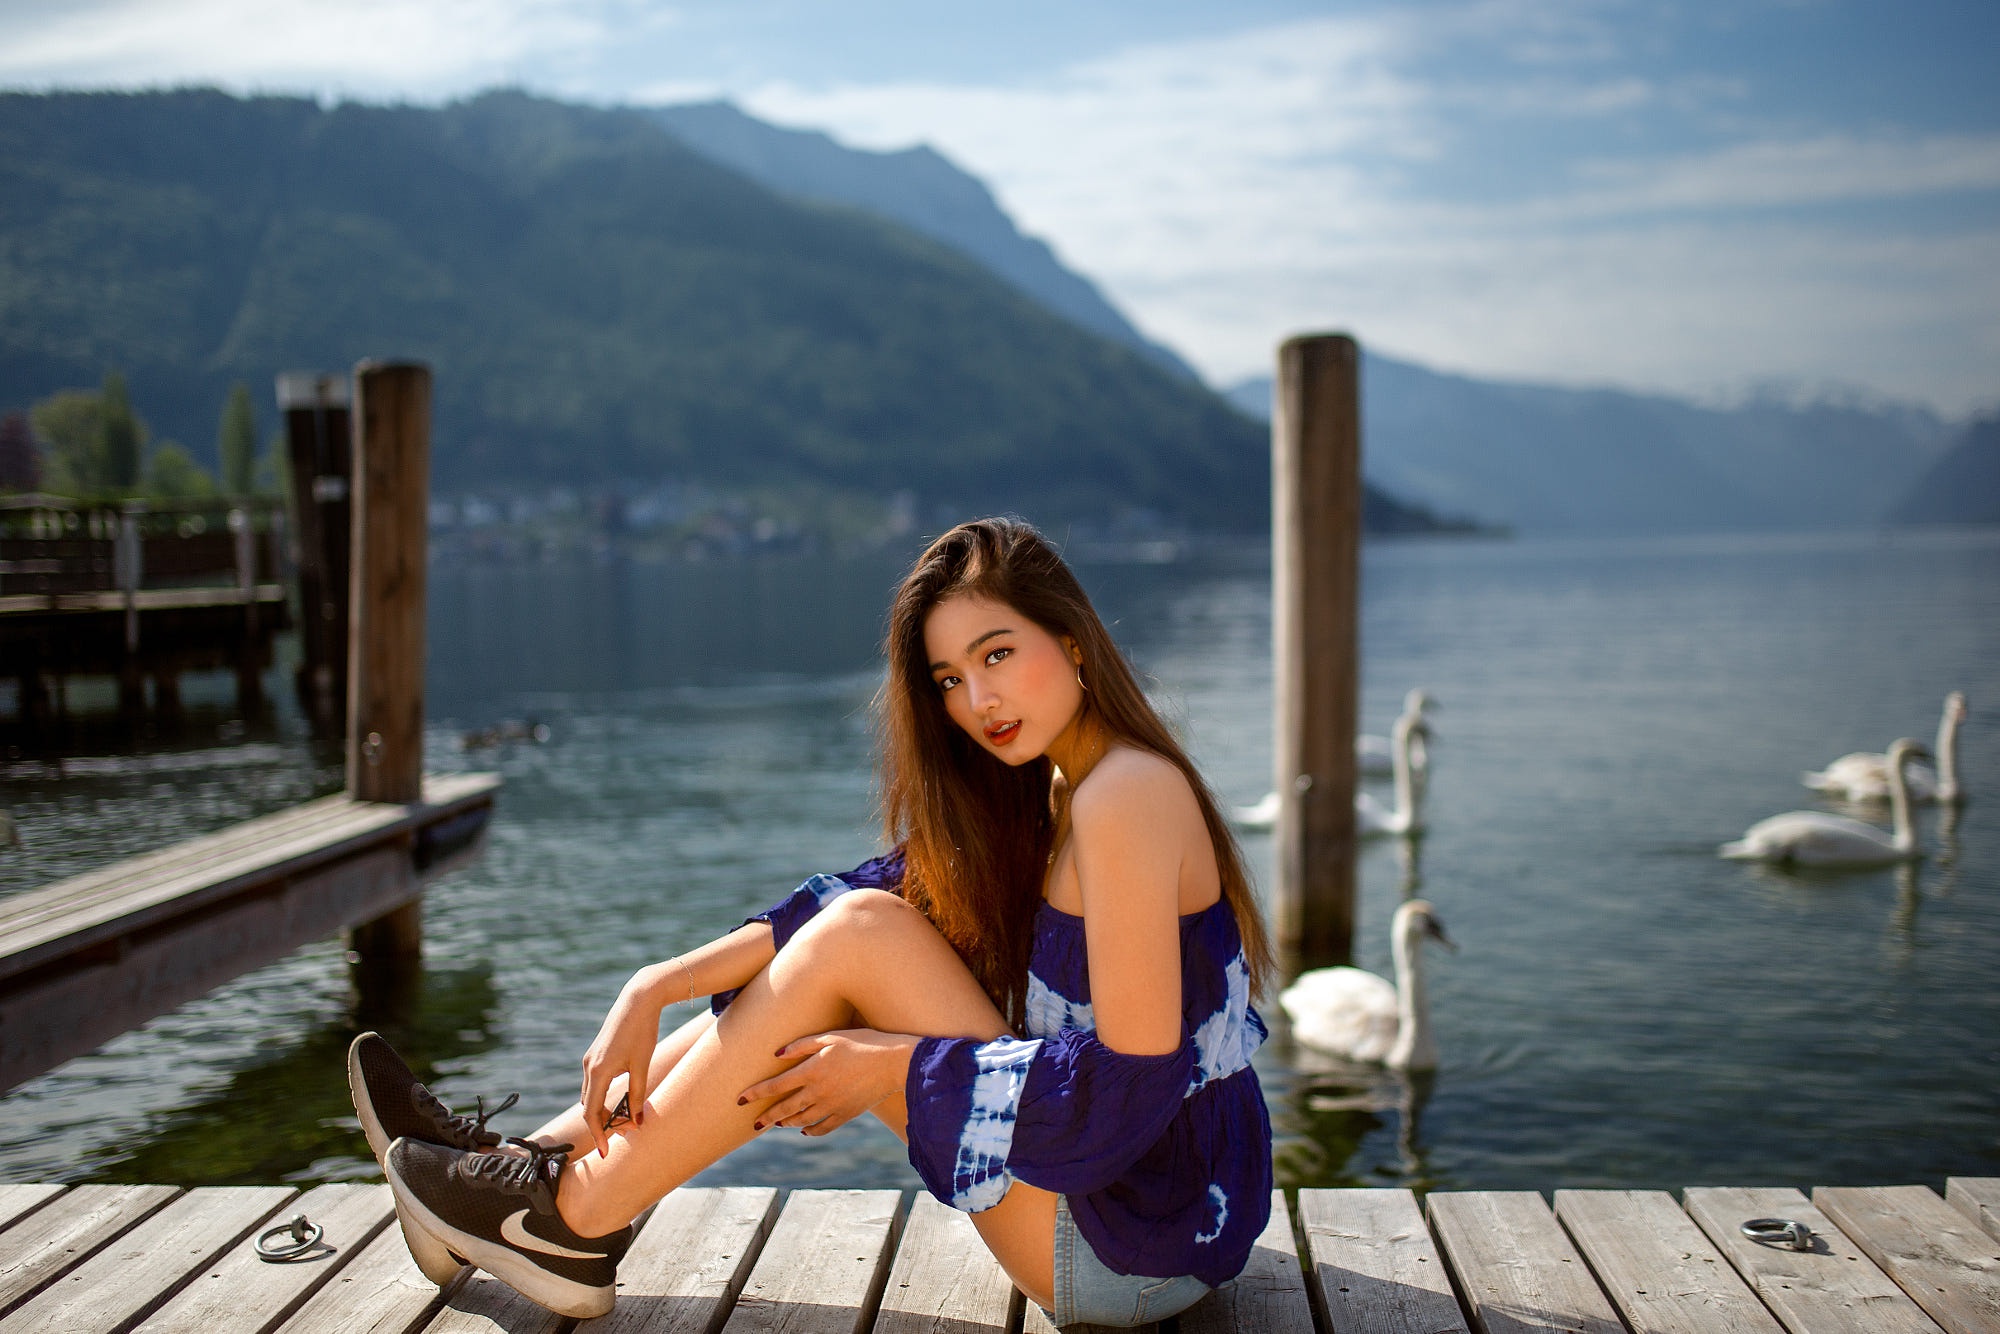 Asian Model Women Long Hair Brunette Lake Swans Dock Sneakers Shorts Jeans Blouse Bare Shoulders Nik 2000x1334